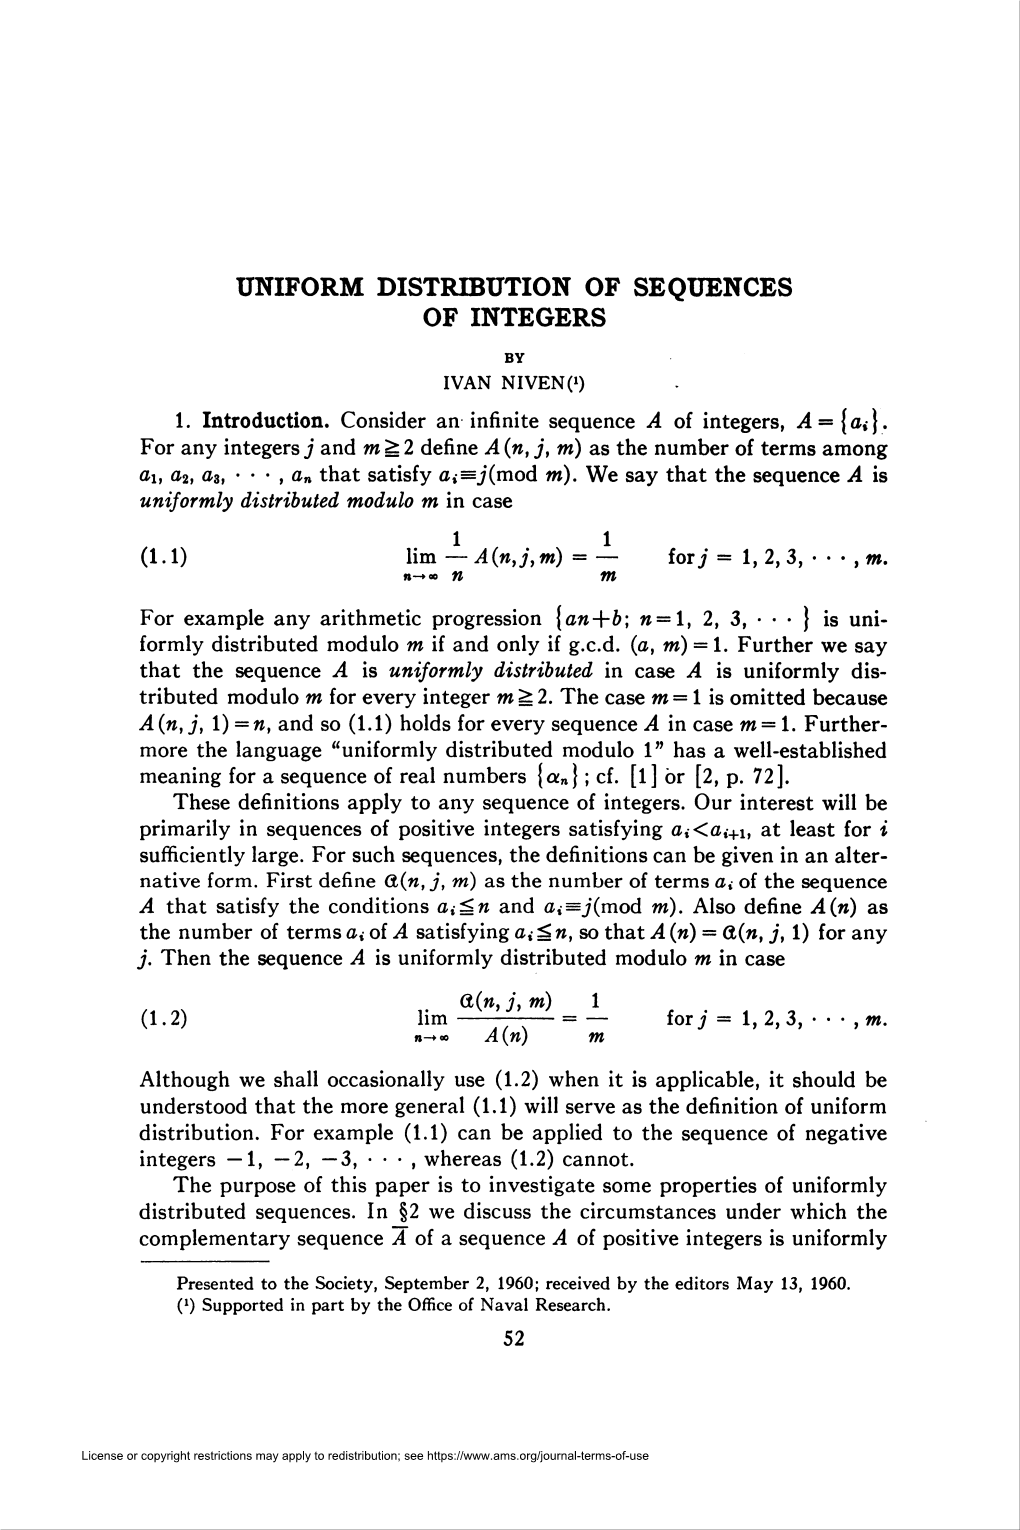 Uniform Distribution of Sequences of Integers